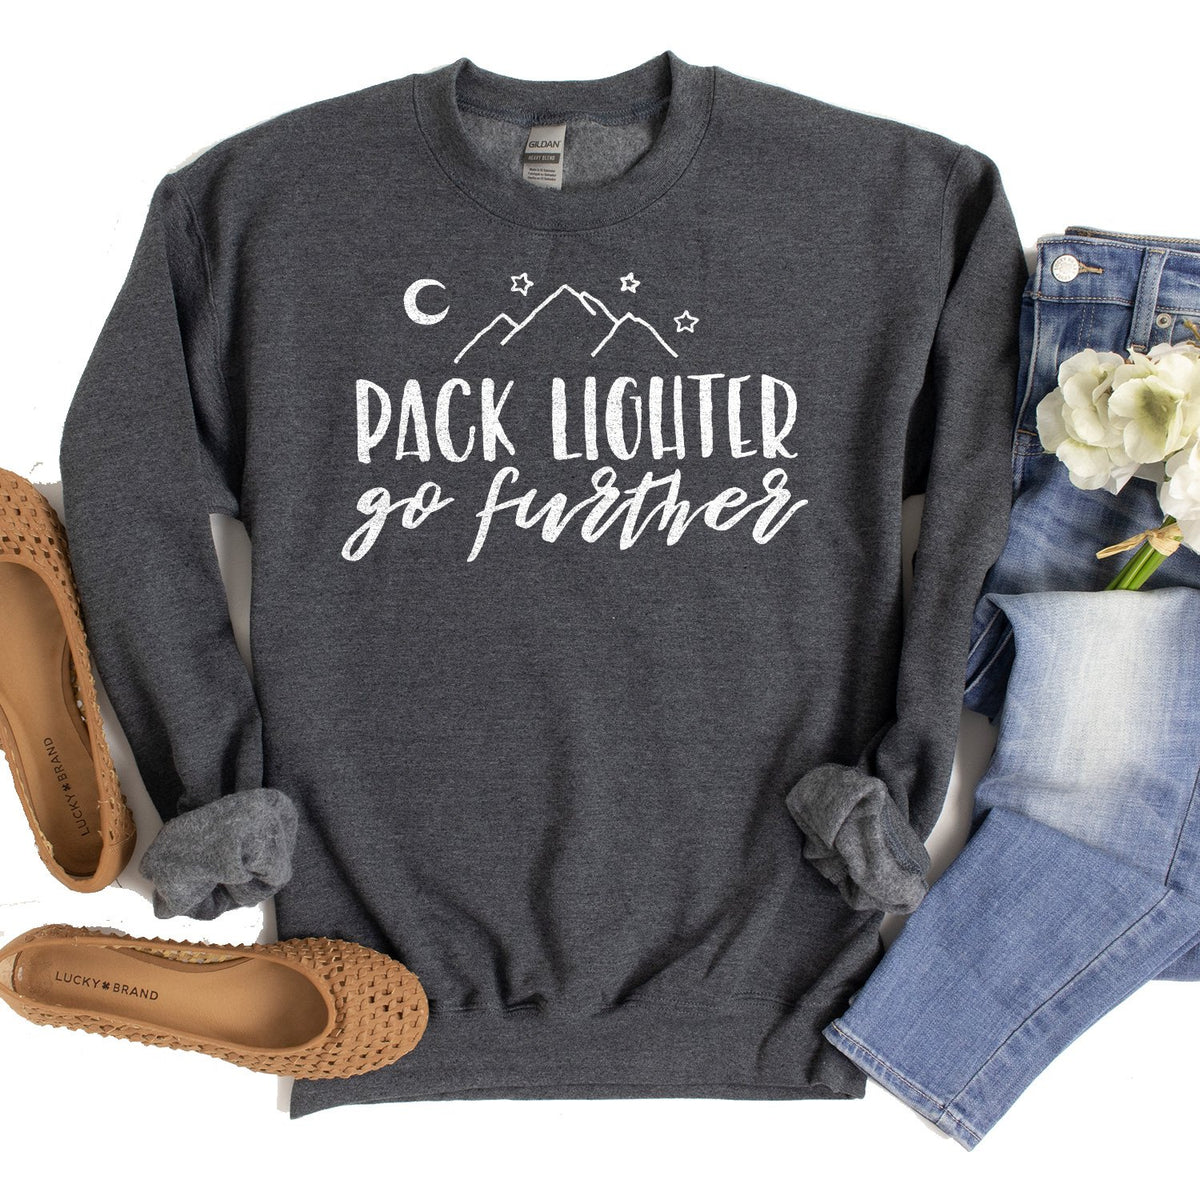 Pack Lighter Go Further - Long Sleeve Heavy Crewneck Sweatshirt